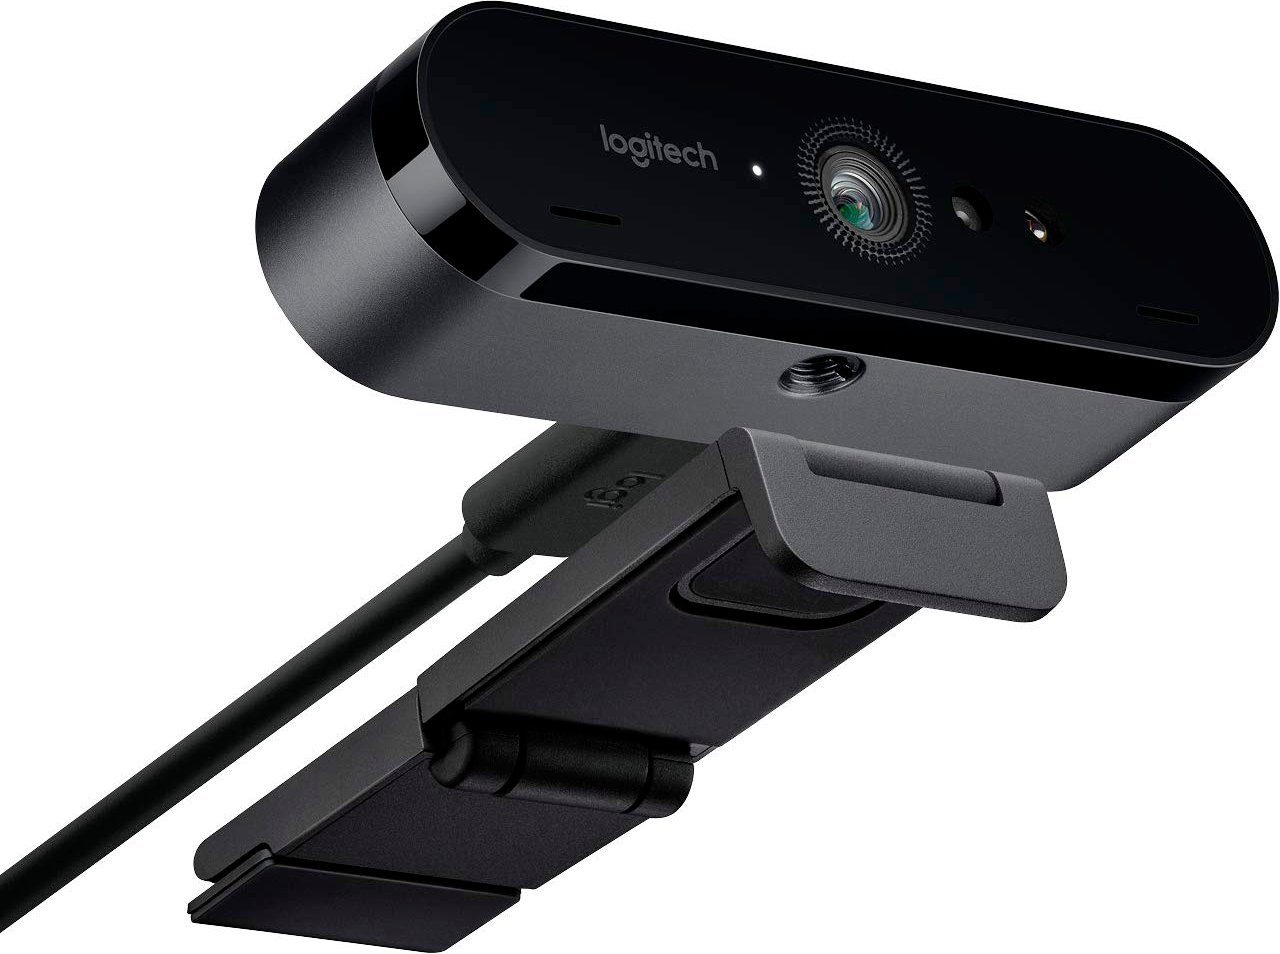 Logitech BRIO 4K STREAM HD, EDITION Webcam IrDA (Infrarot) (4K Ultra